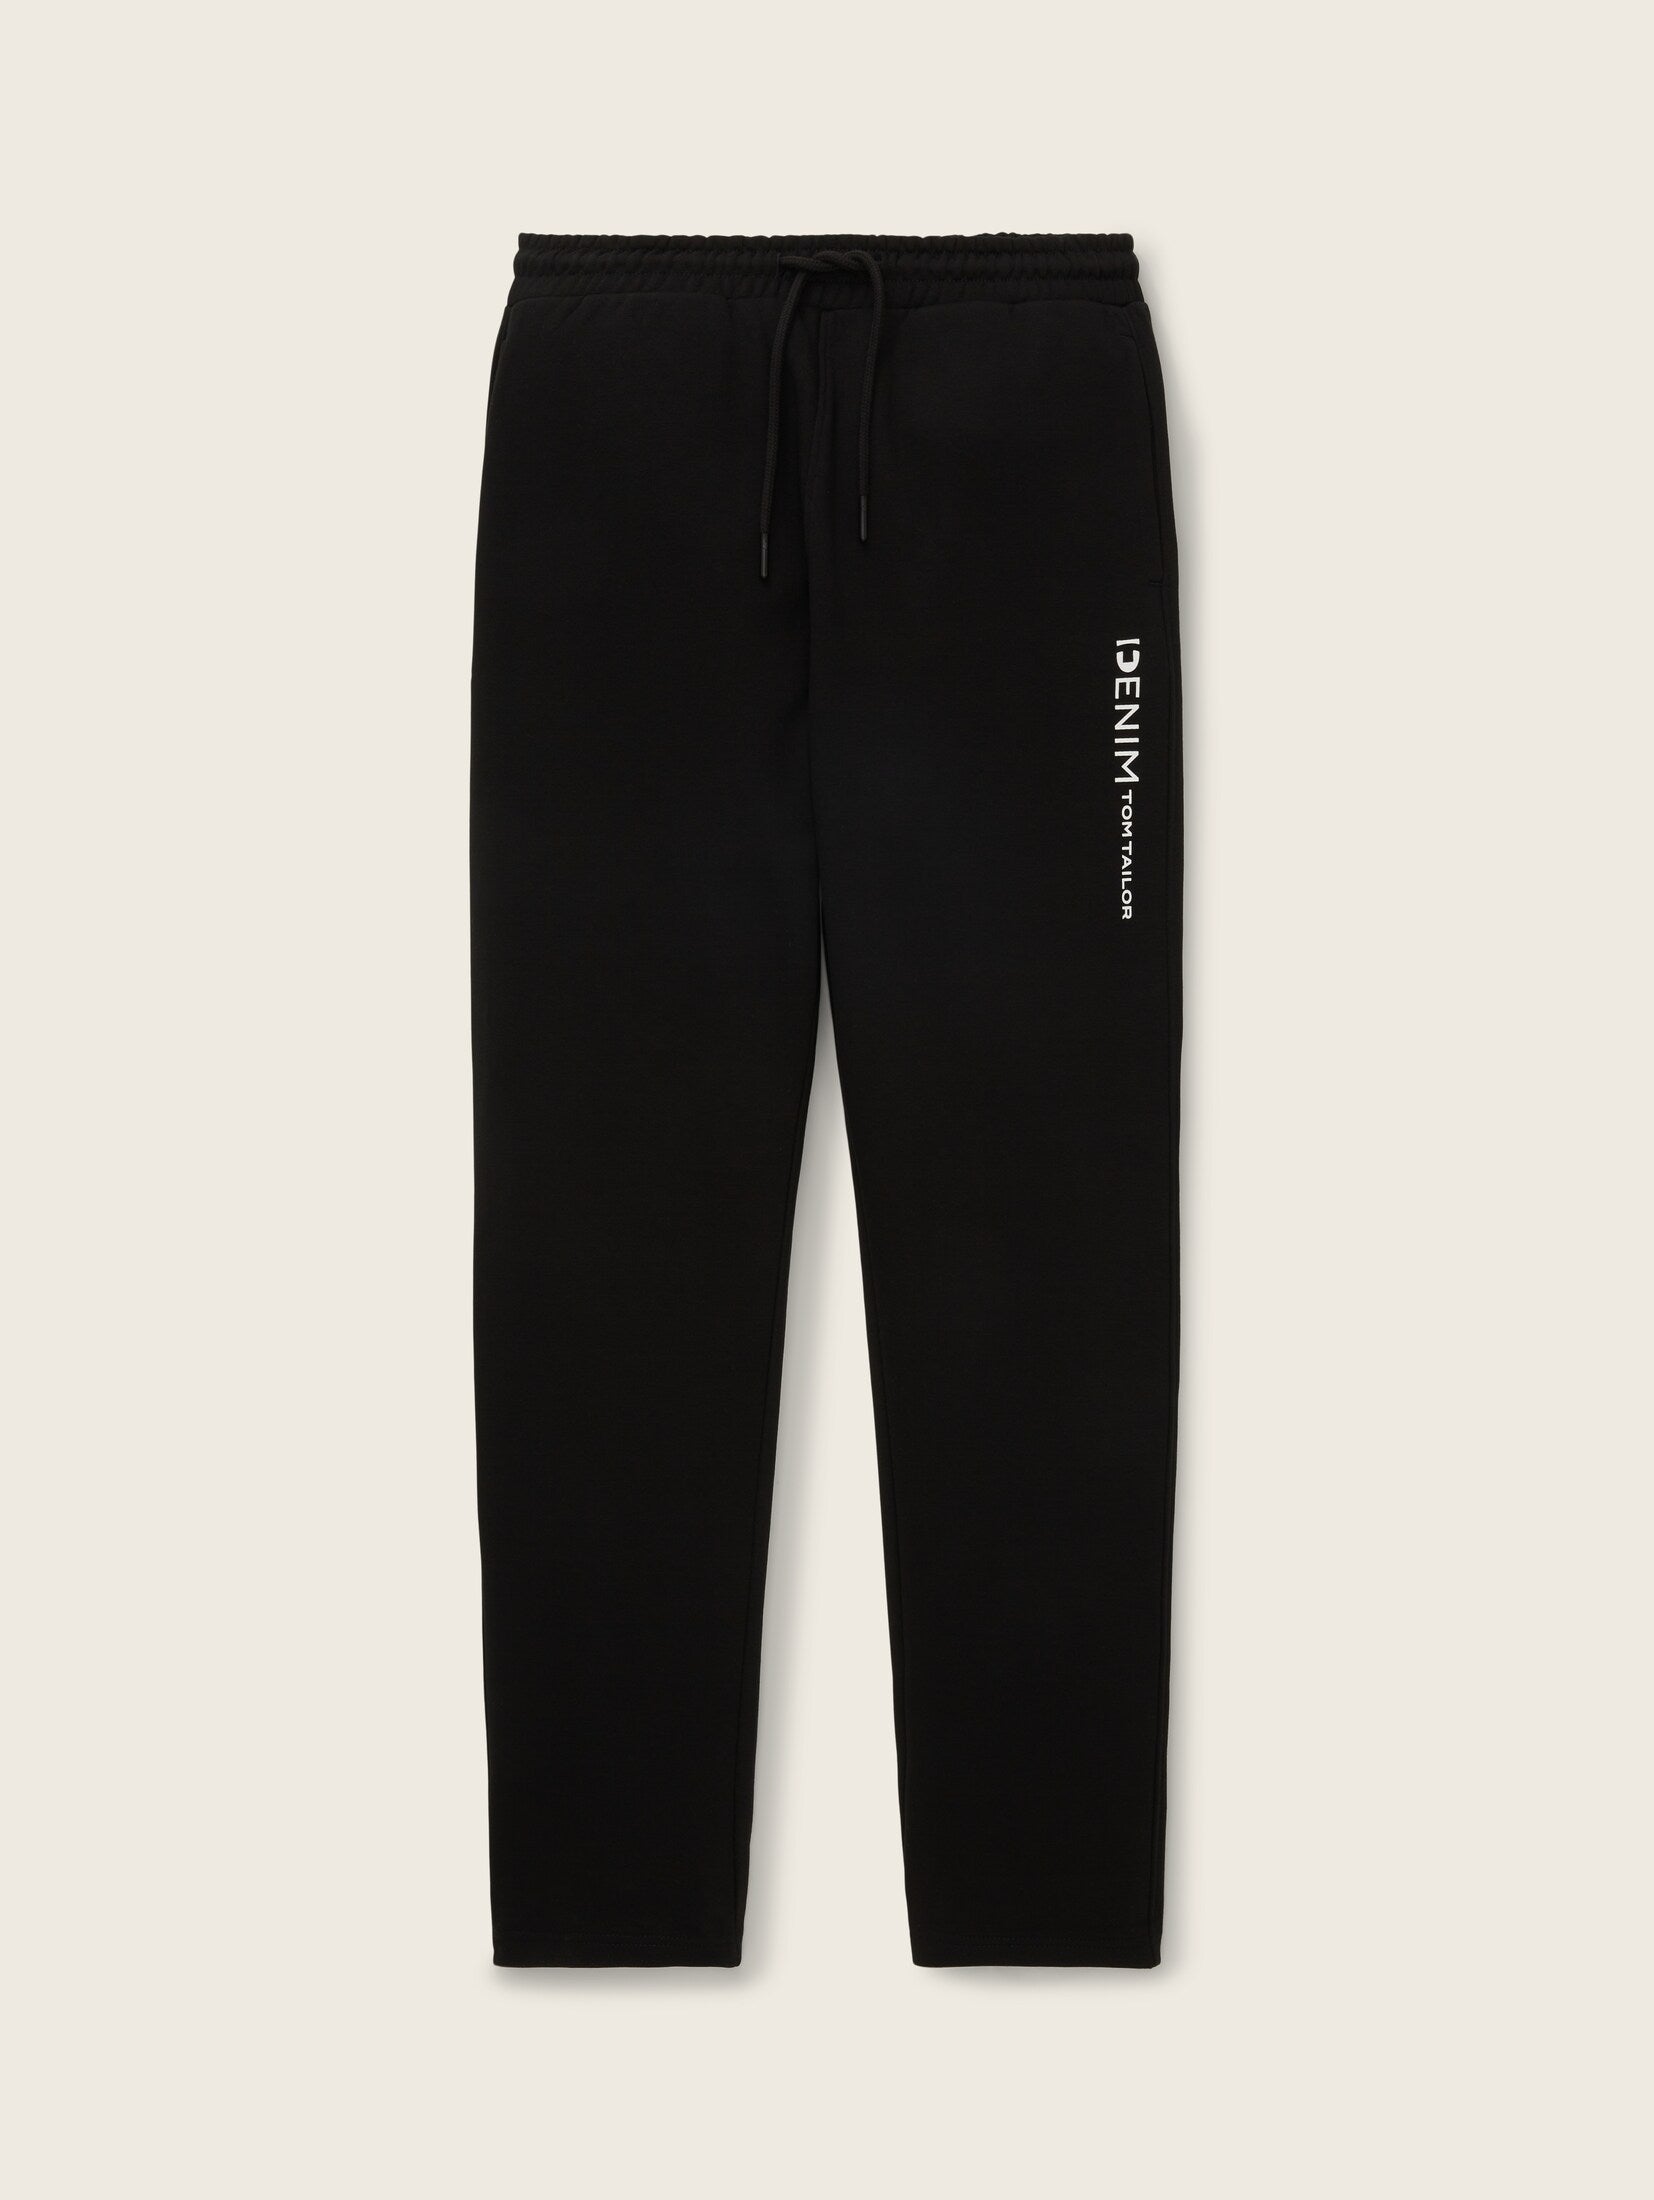 Tom Tailor Black Printed Sweatpants